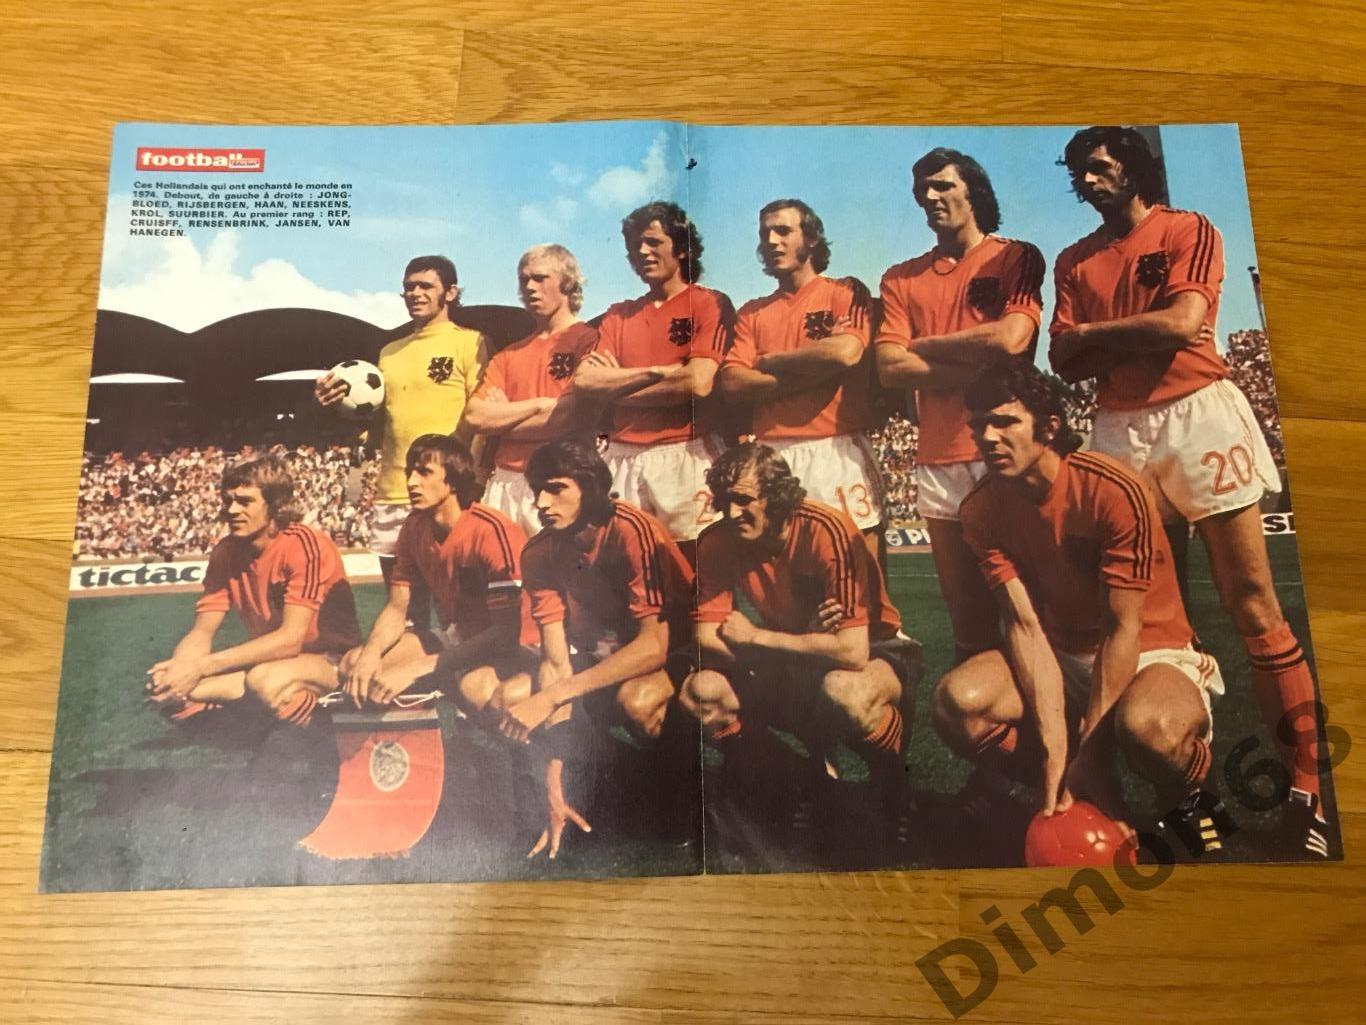 сб голландии ч м 1974г (football magazine)